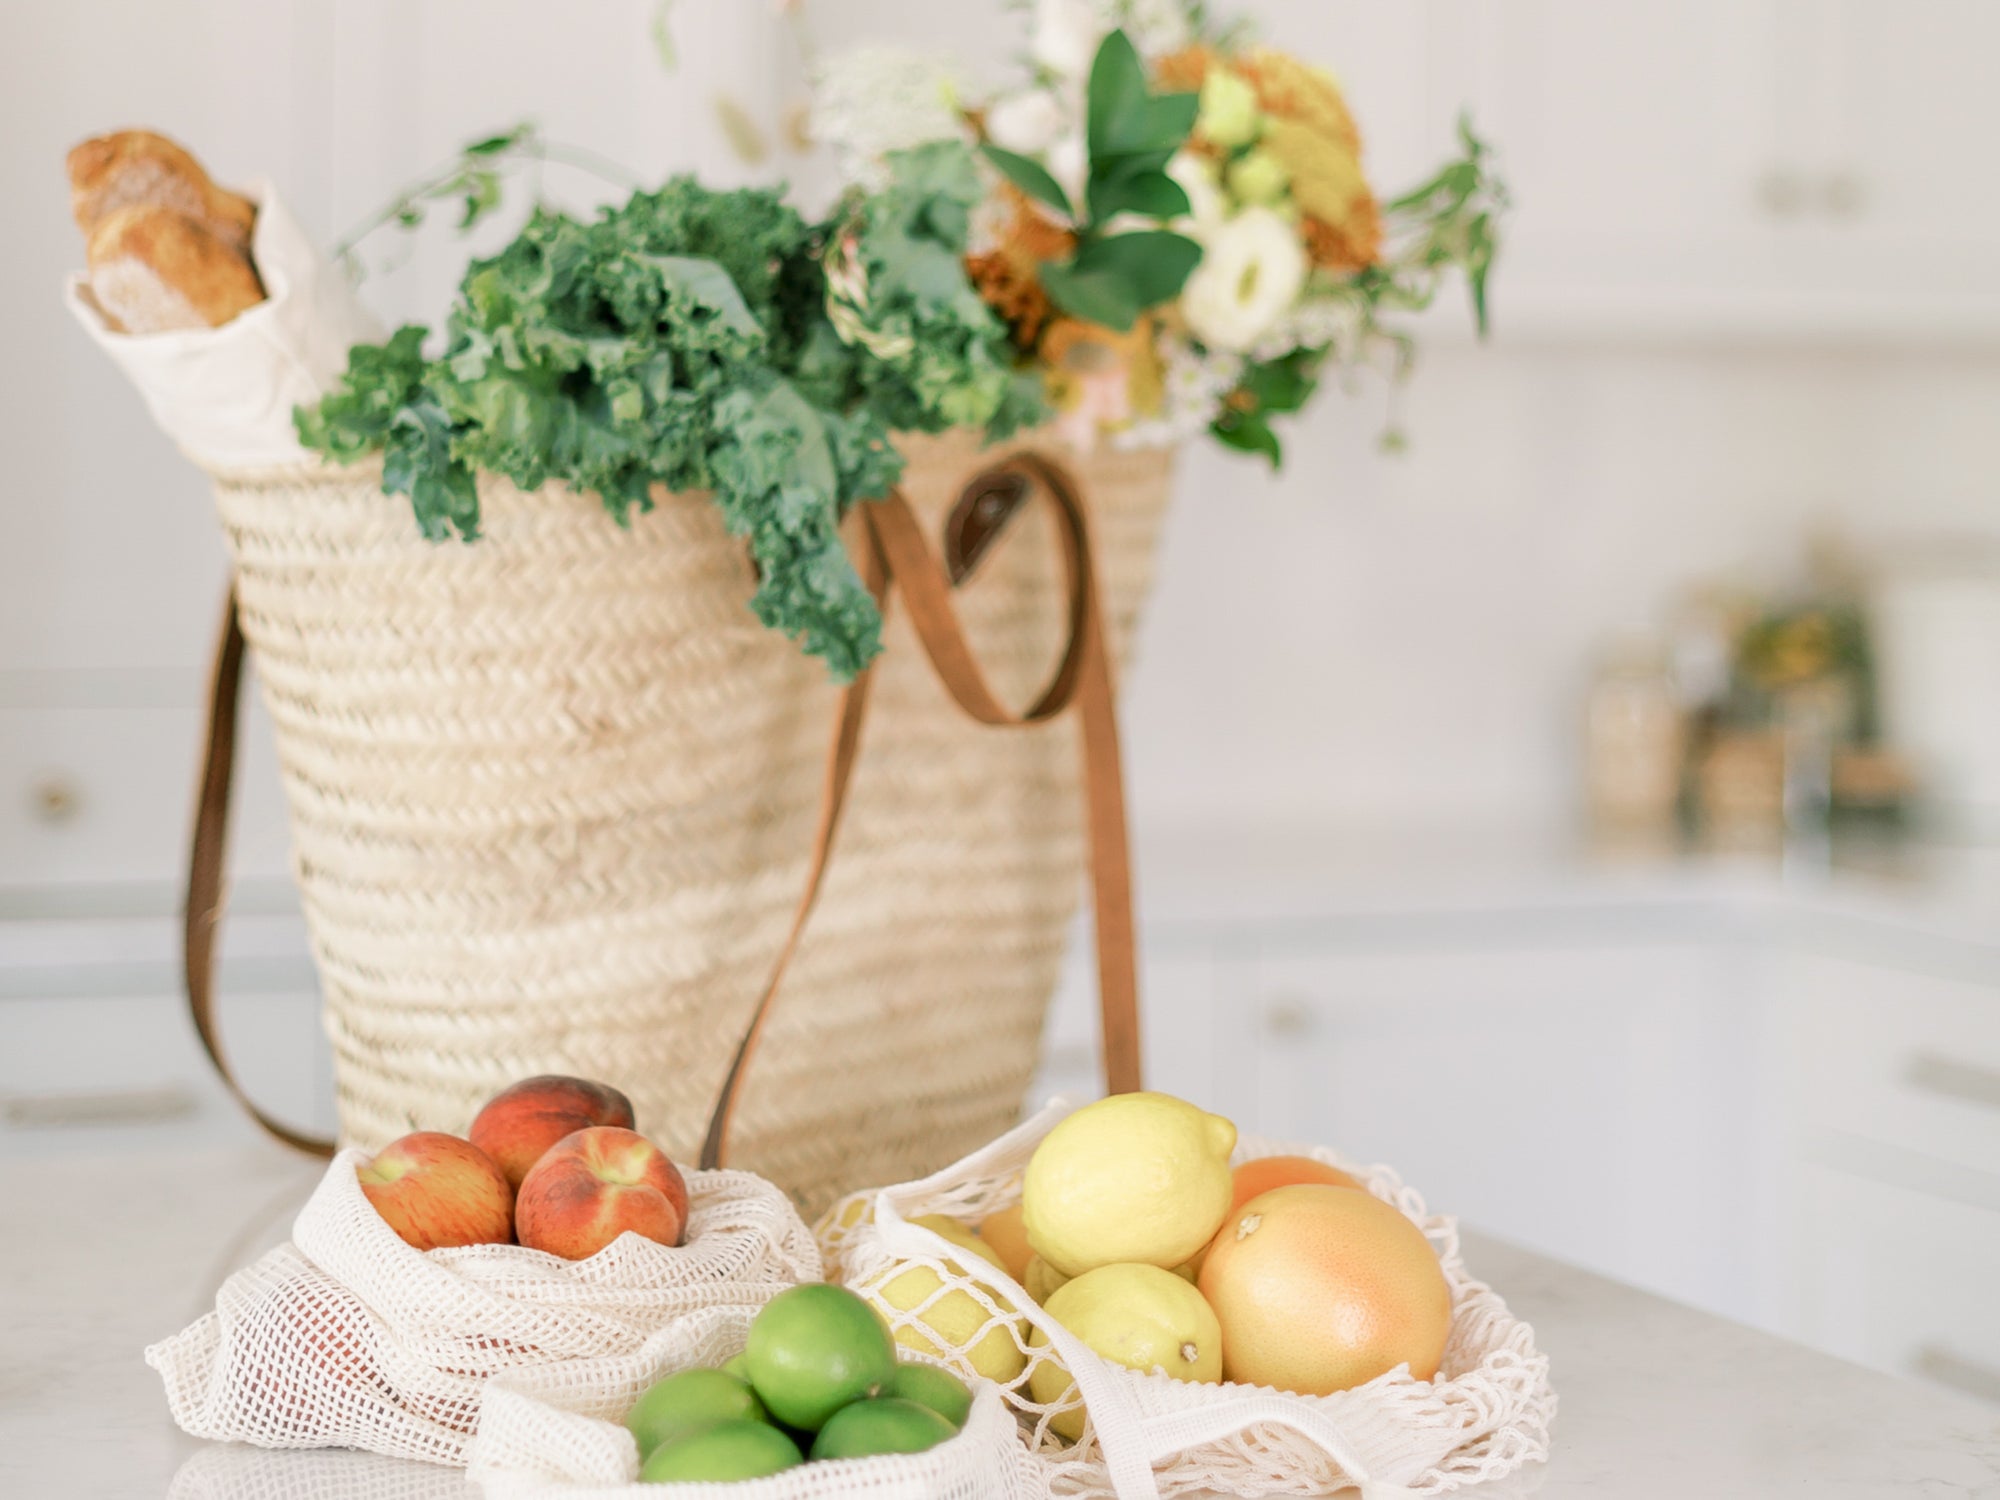 Fruits & Vegetables for Great Skin